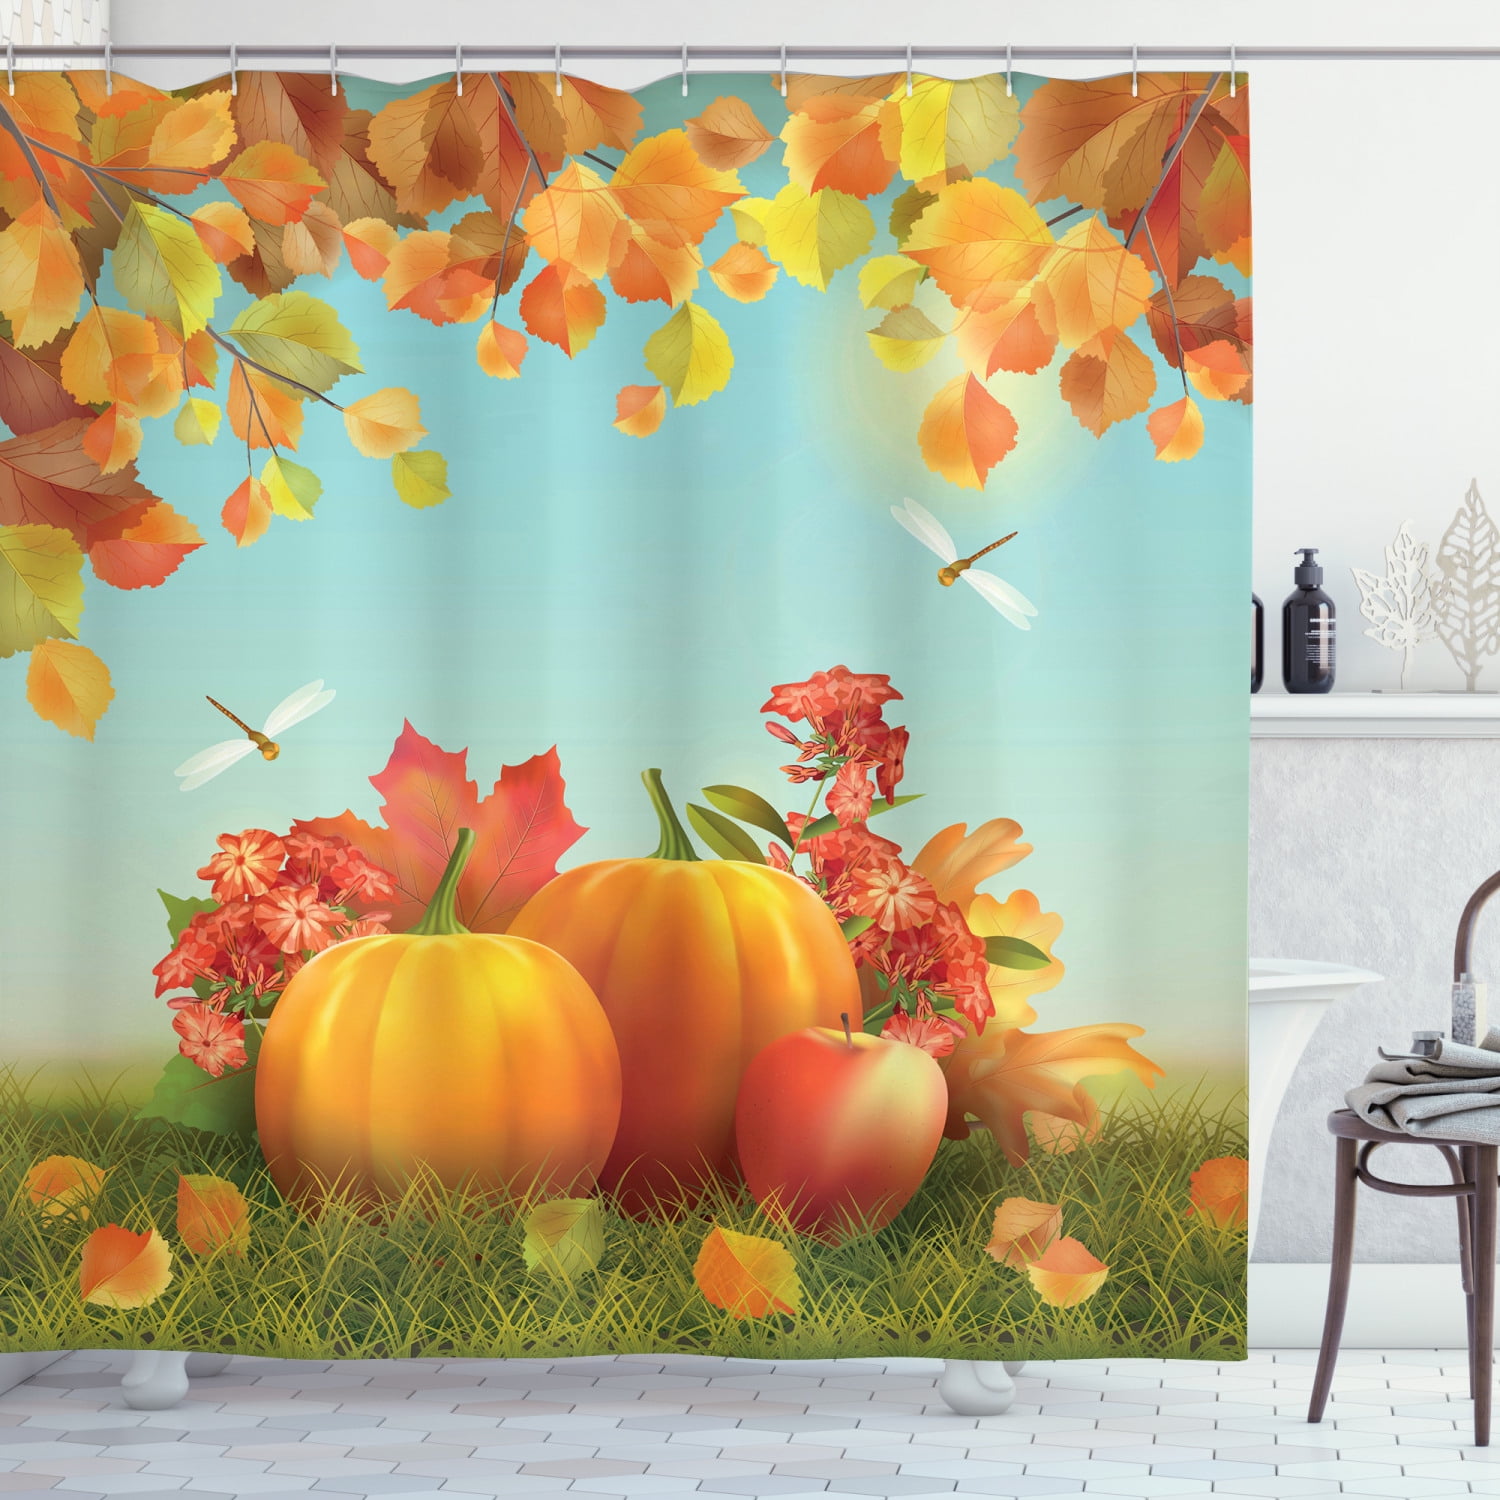 Happy Thanksgiving Day Fall Harvest Turkey Shower Curtain Liner Bathroom Decor 